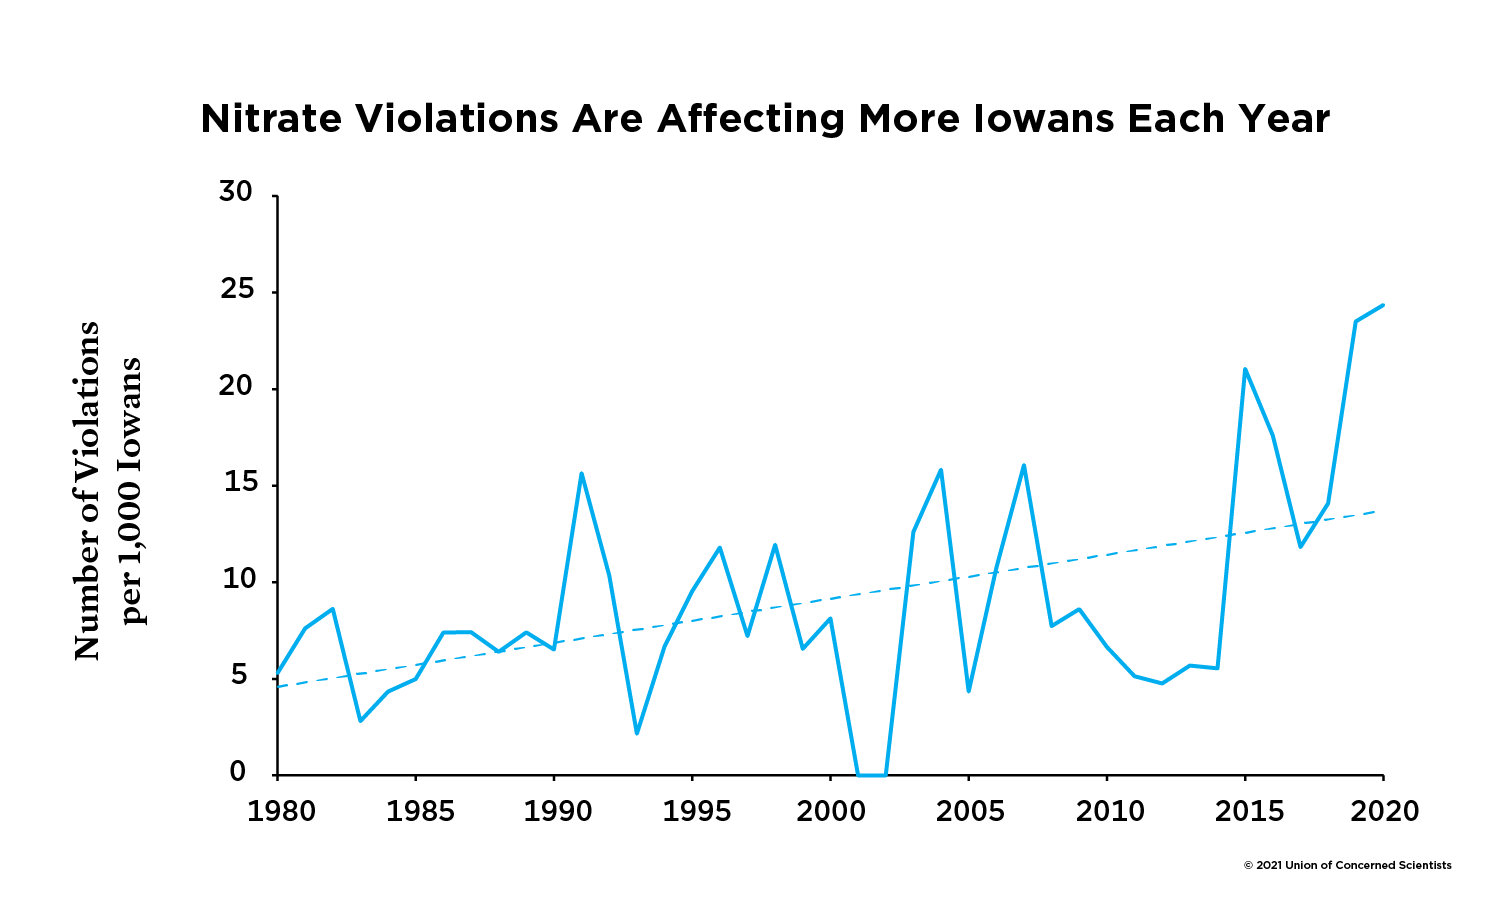 Graph showing increasing number of nitrate violations per capita in Iowa